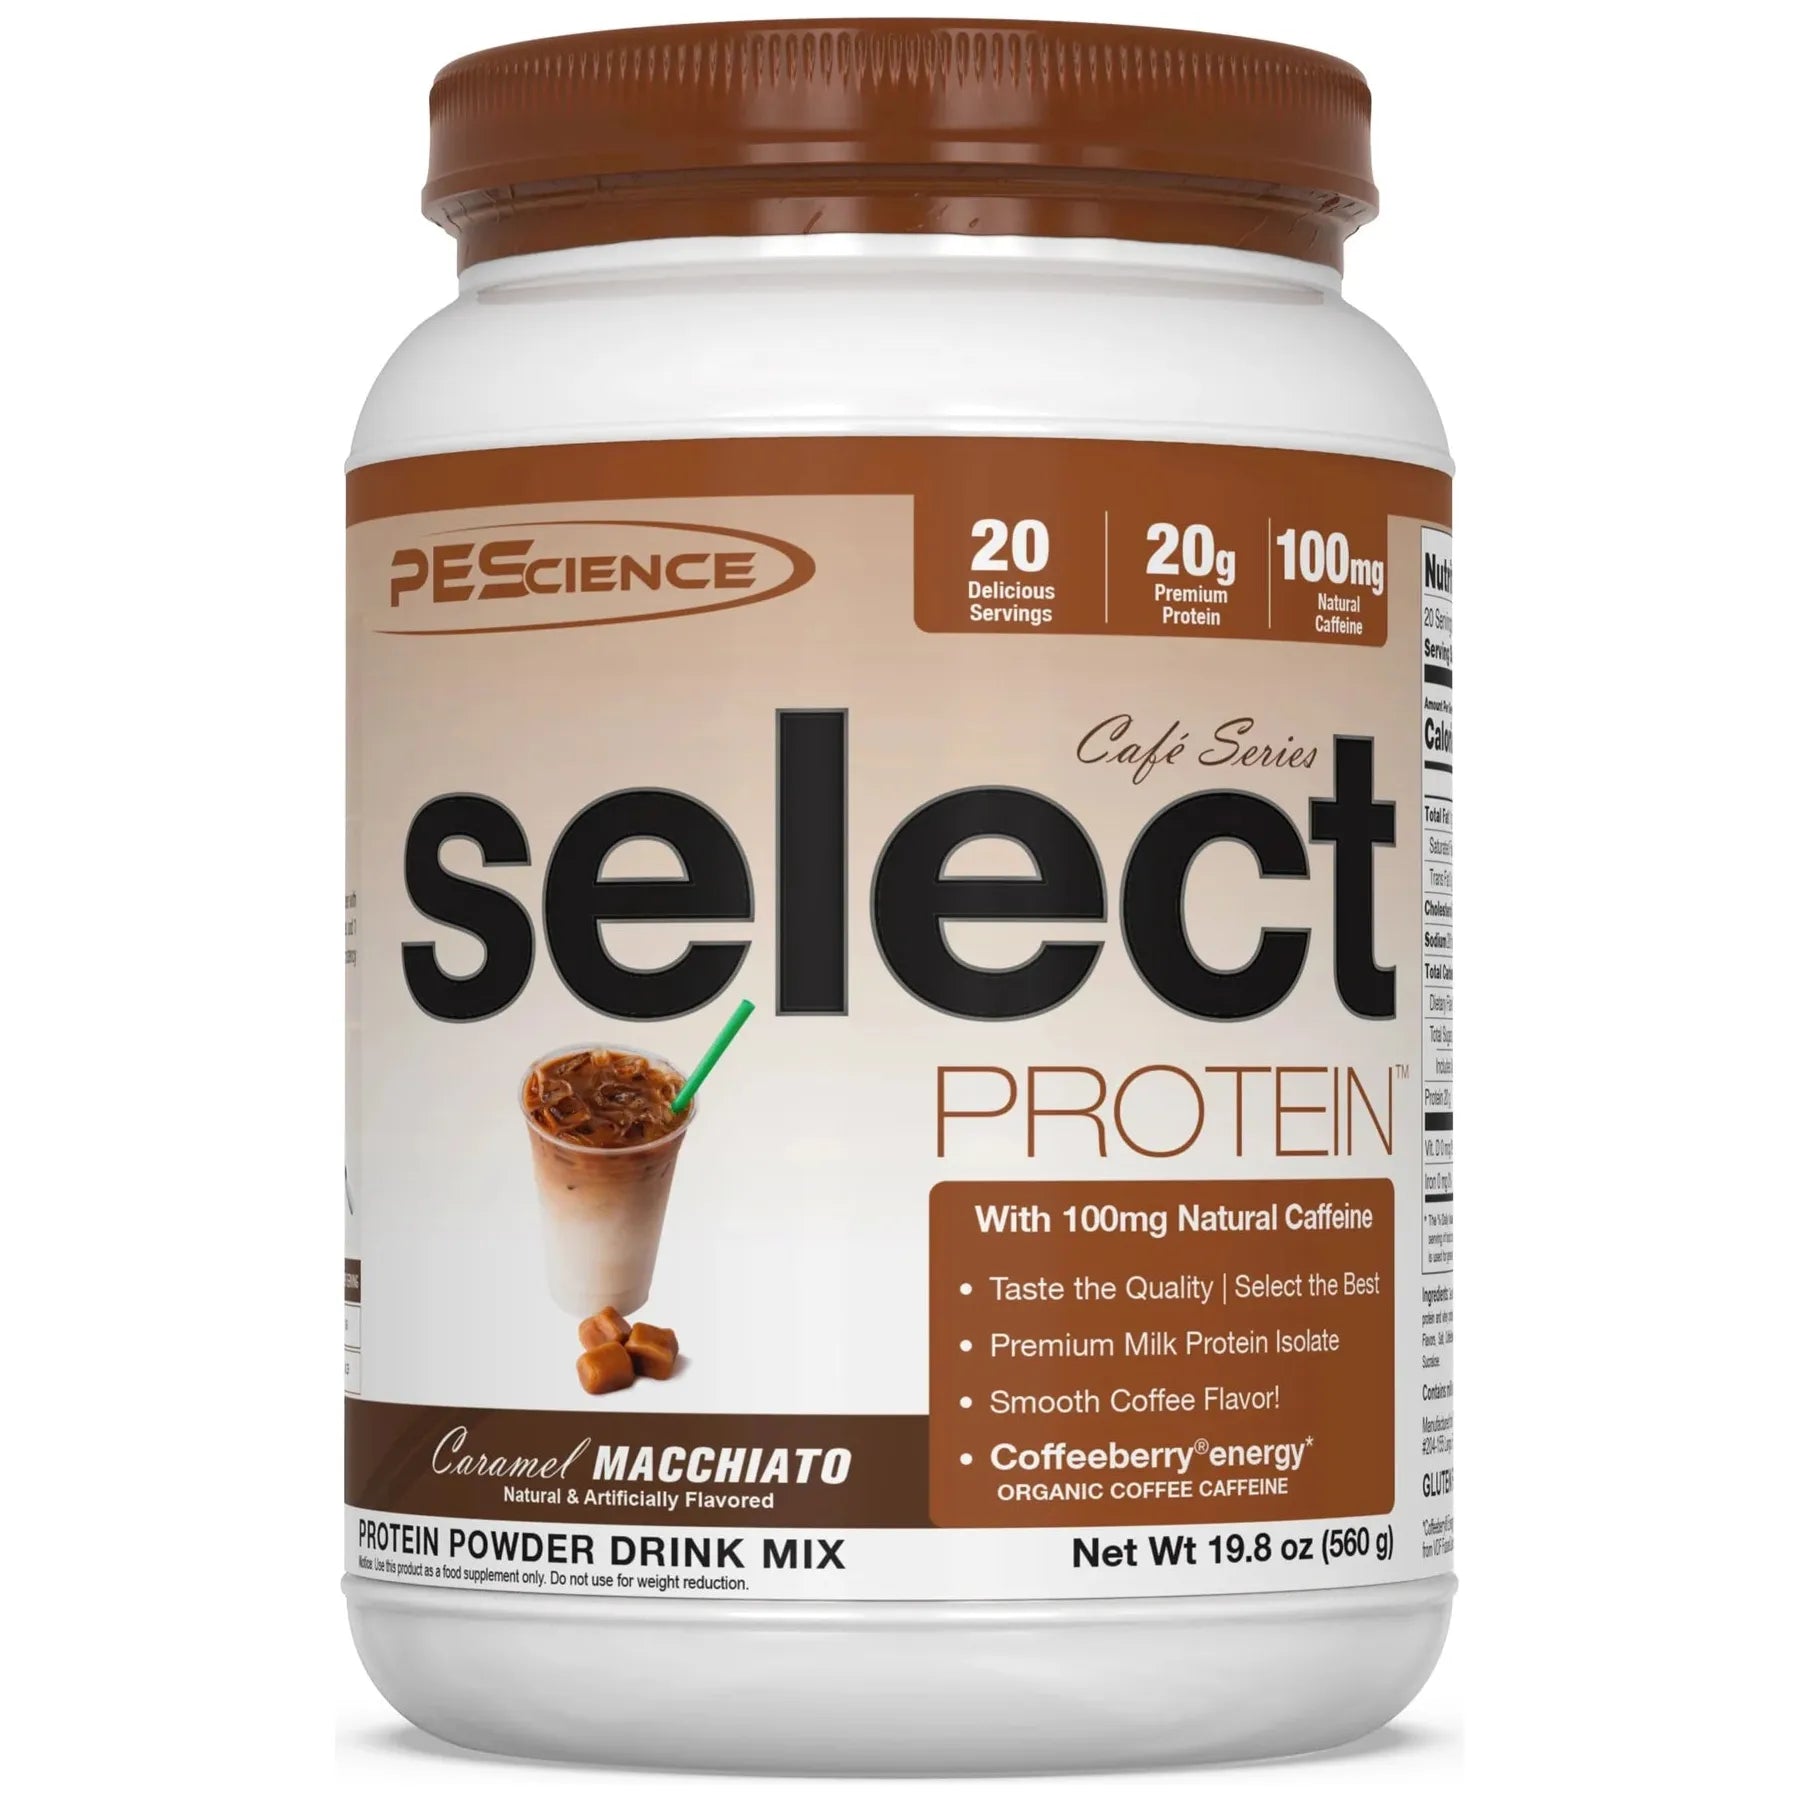 Pescience Select Café Protein (20 servings) Whey Protein Blend Iced Mocha,Caramel Macchiato PEScience